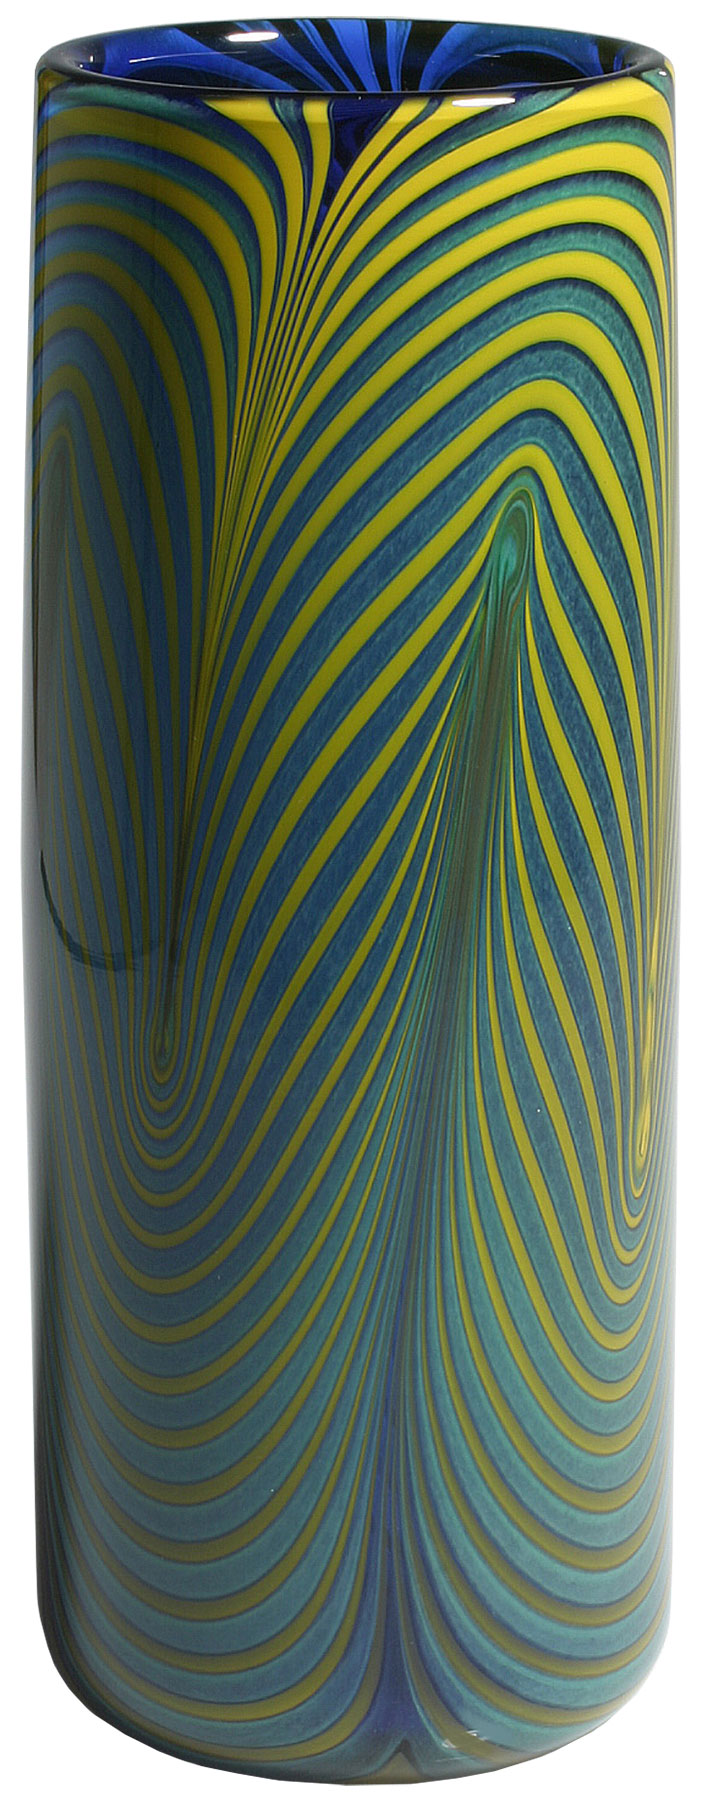 Glass vase "Ocean Dream" by Hans Wudy